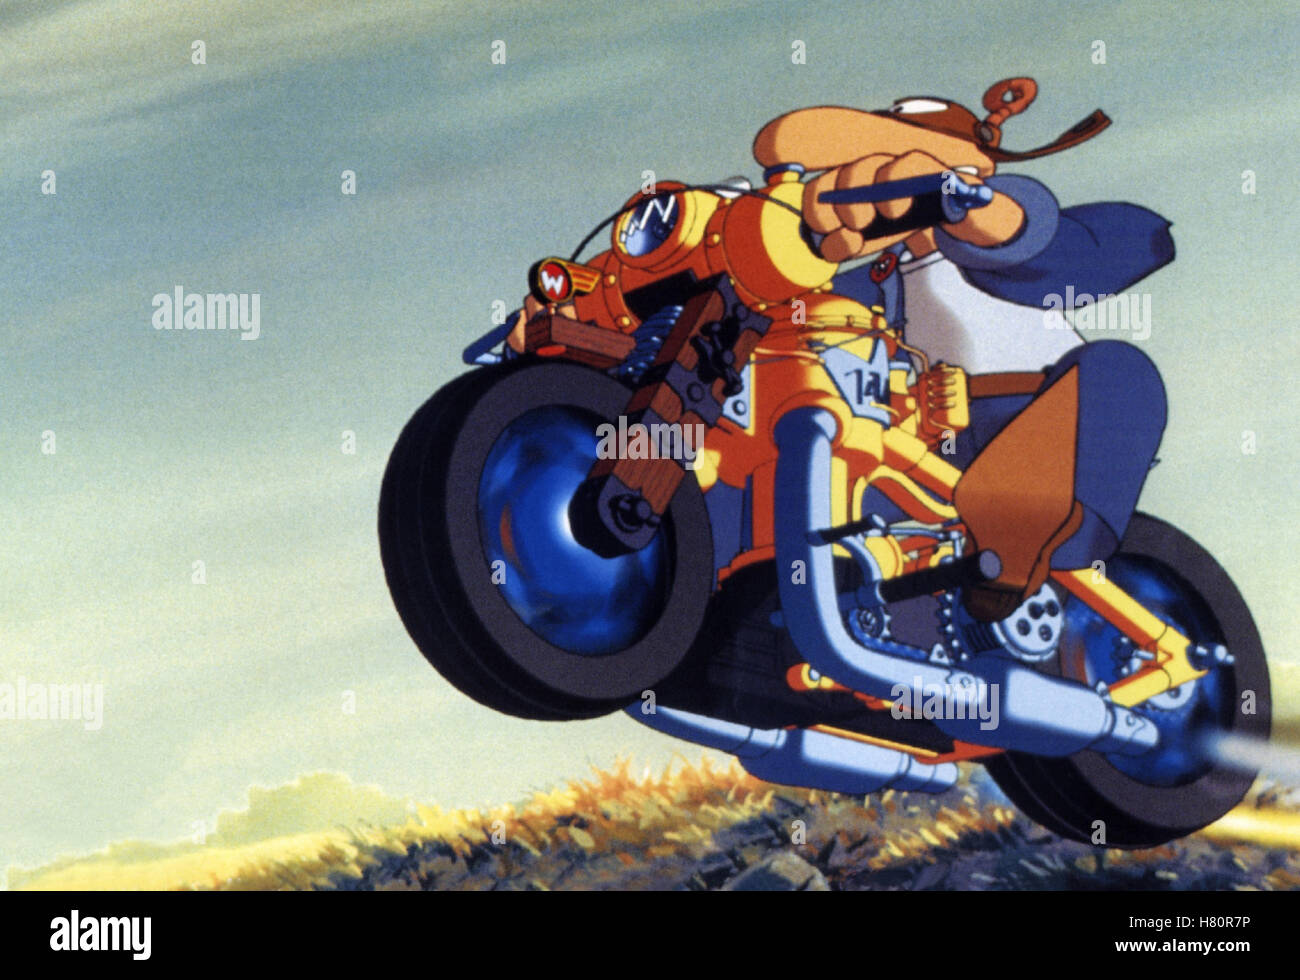 Werner - Volles Rooäää!!!, (WERNER - VOLLES ROOÄÄÄ!!!) D 1999, Regie: Gerhard Hahn, Szene, Chiave: Motorrad, Motorradfahrer, Abheben Foto Stock